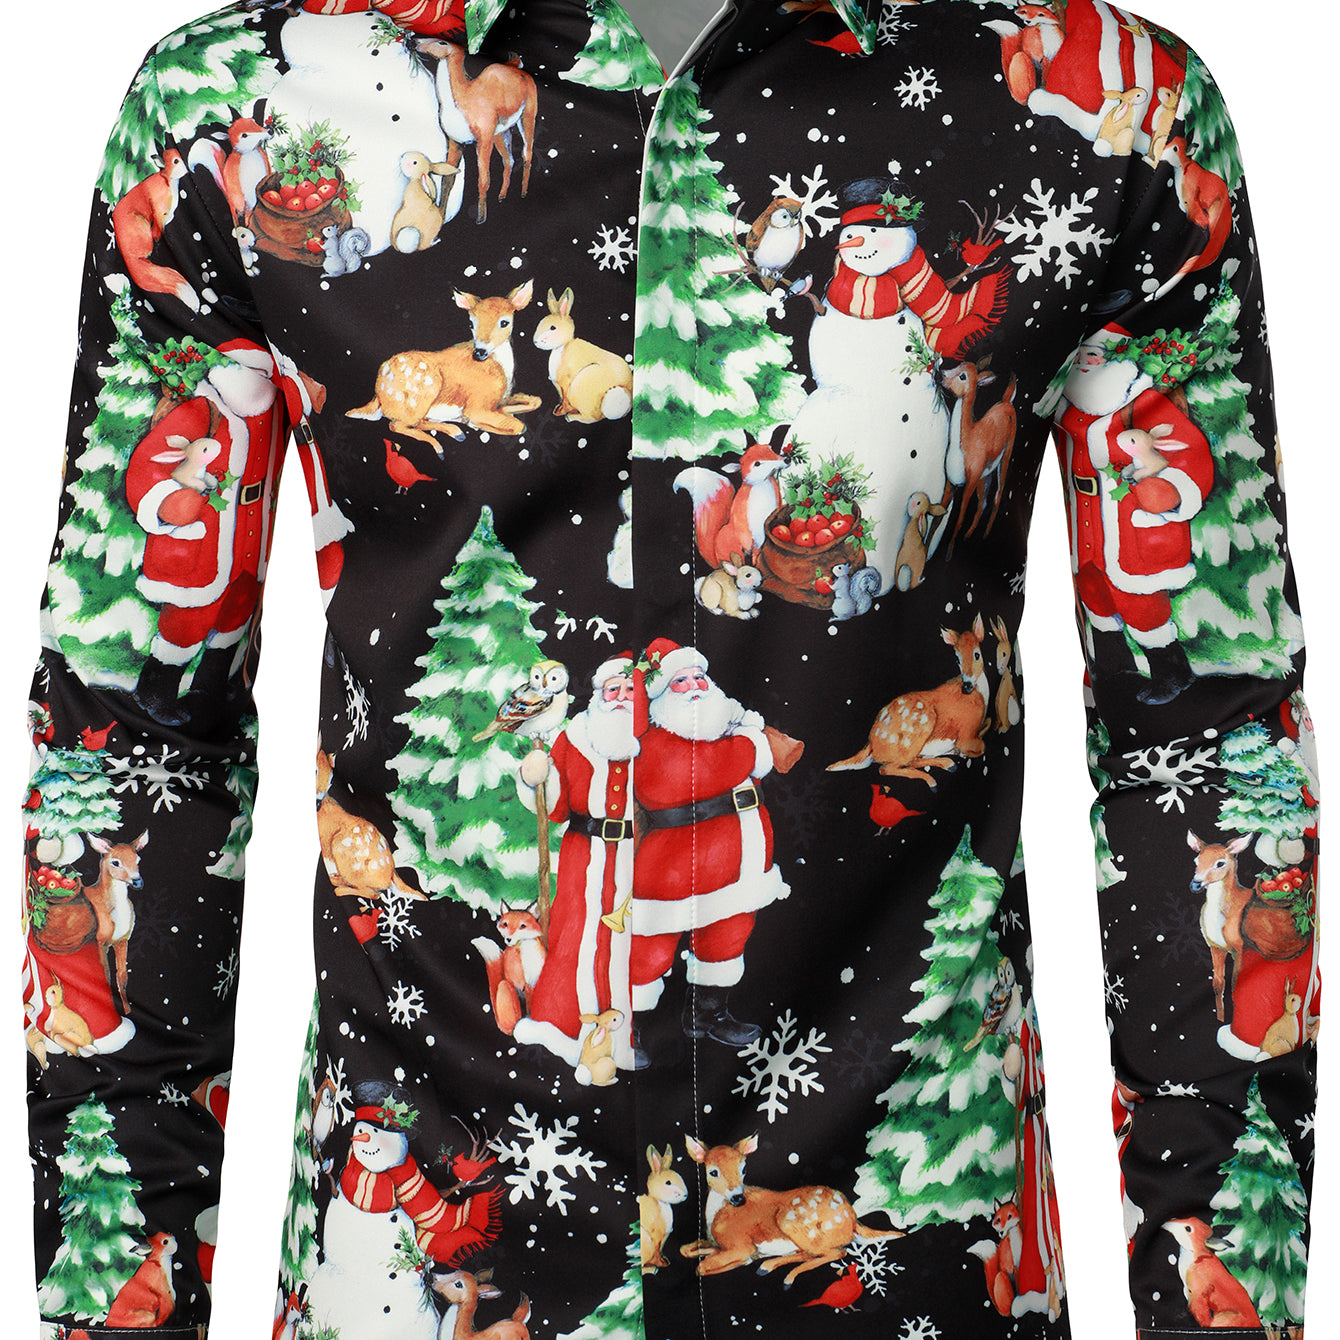 Men's Vintage Santa Claus Snowman Christmas Long Sleeve Shirt